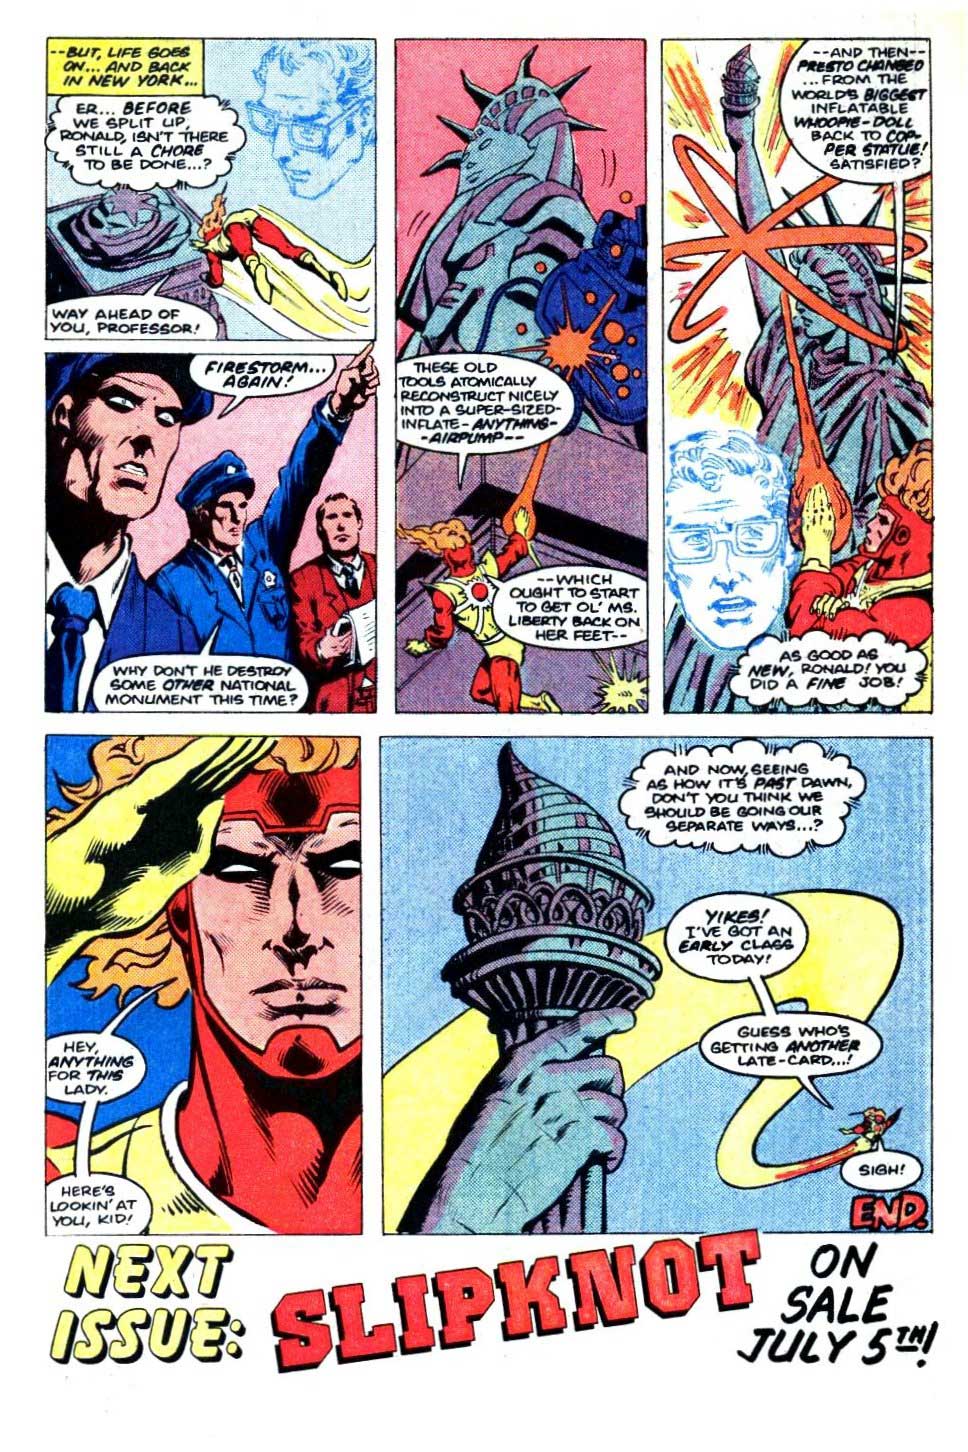 Fury of Firestorm #27 (Sept 1984)